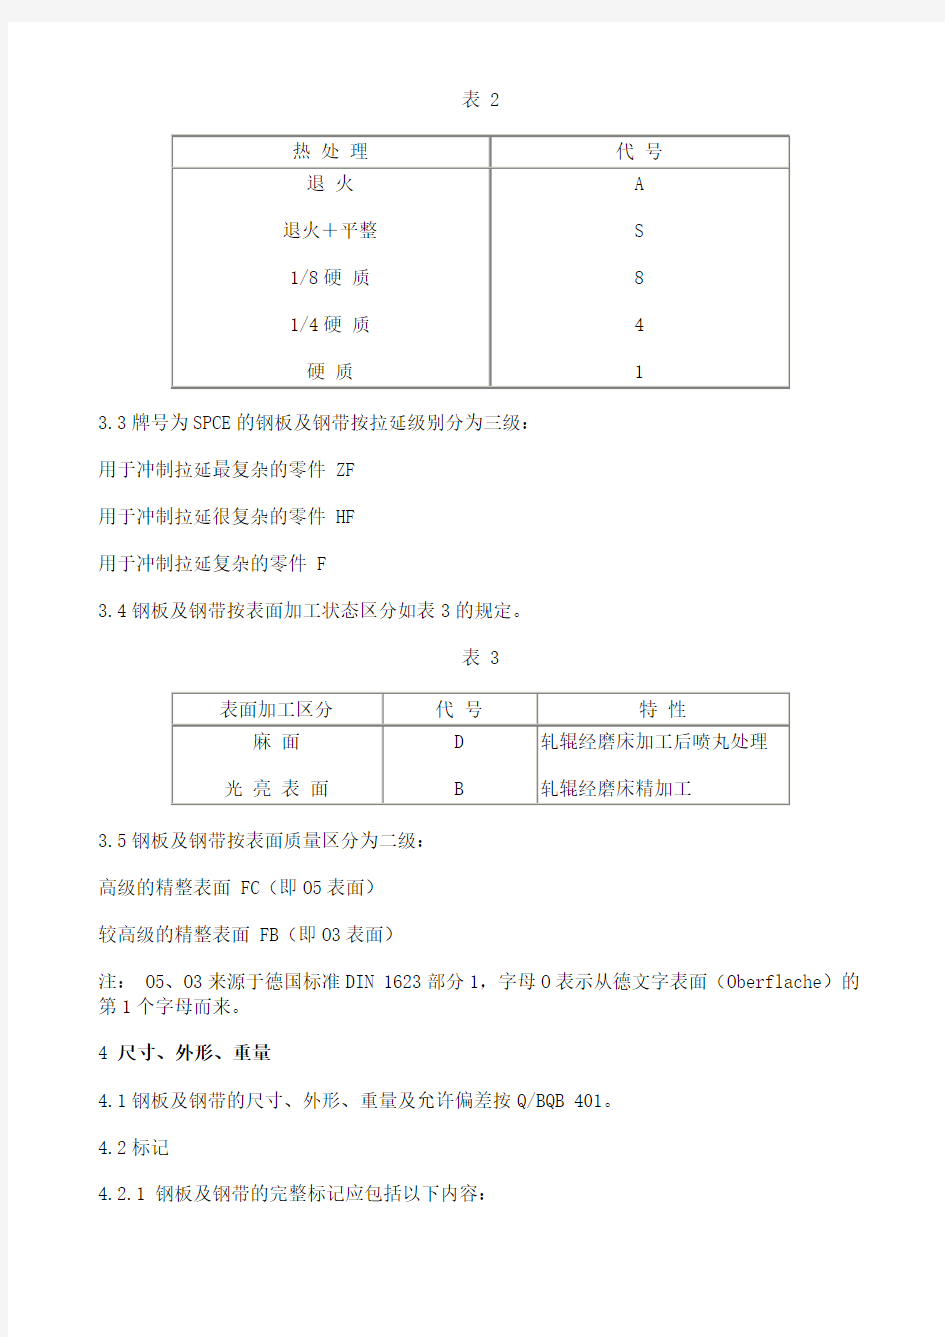 spcc(上海宝钢集团公司企业标准)